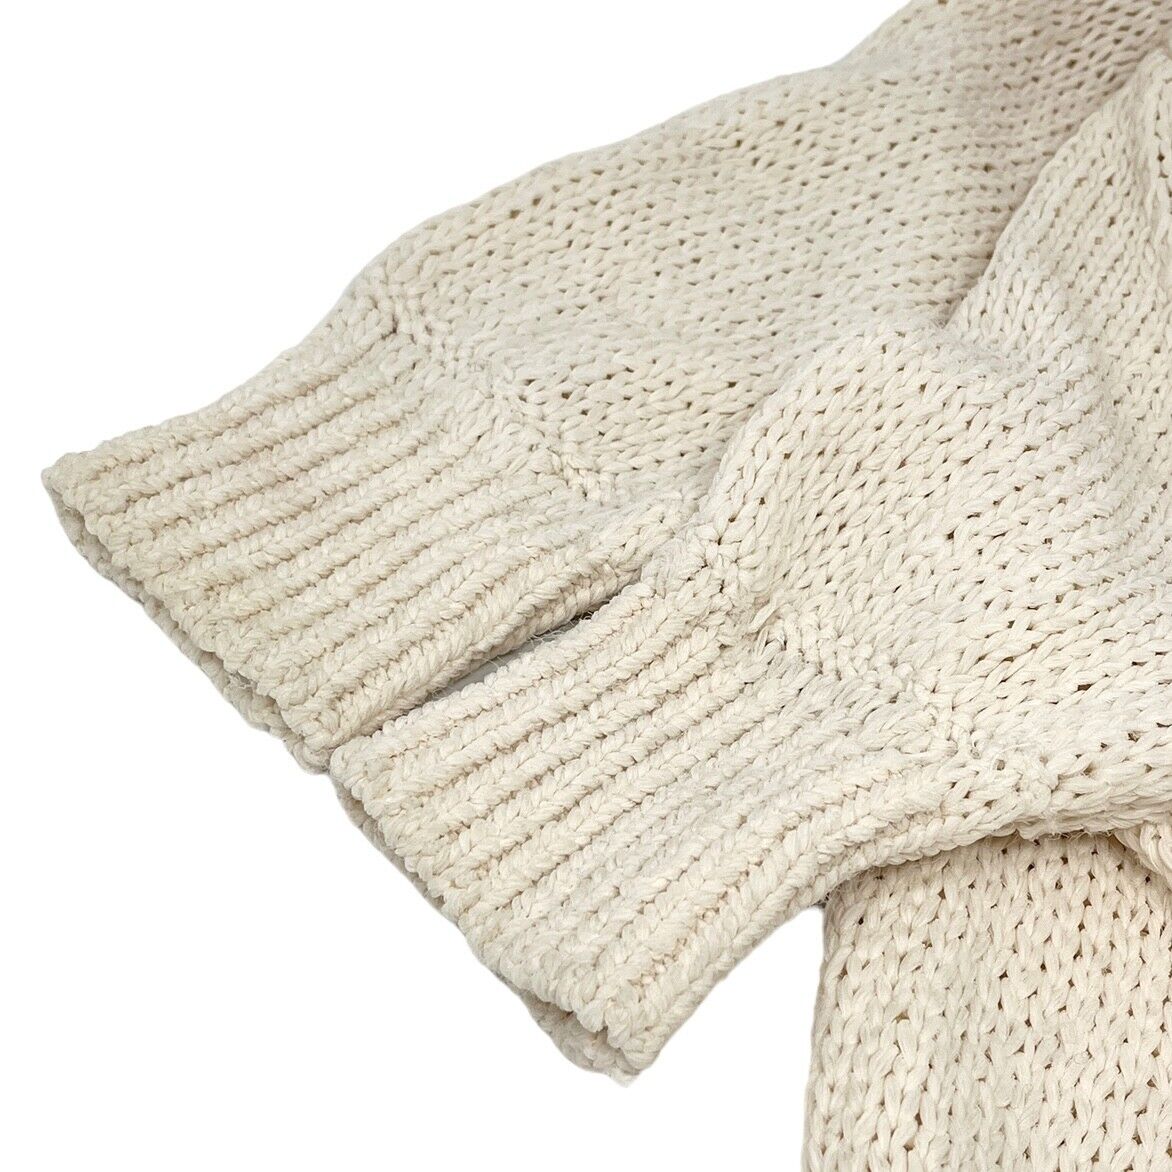 CHANEL Vintage 09C Heart CC Logo Knit Tunic #38 Sweater Top Cream Silk Rank AB